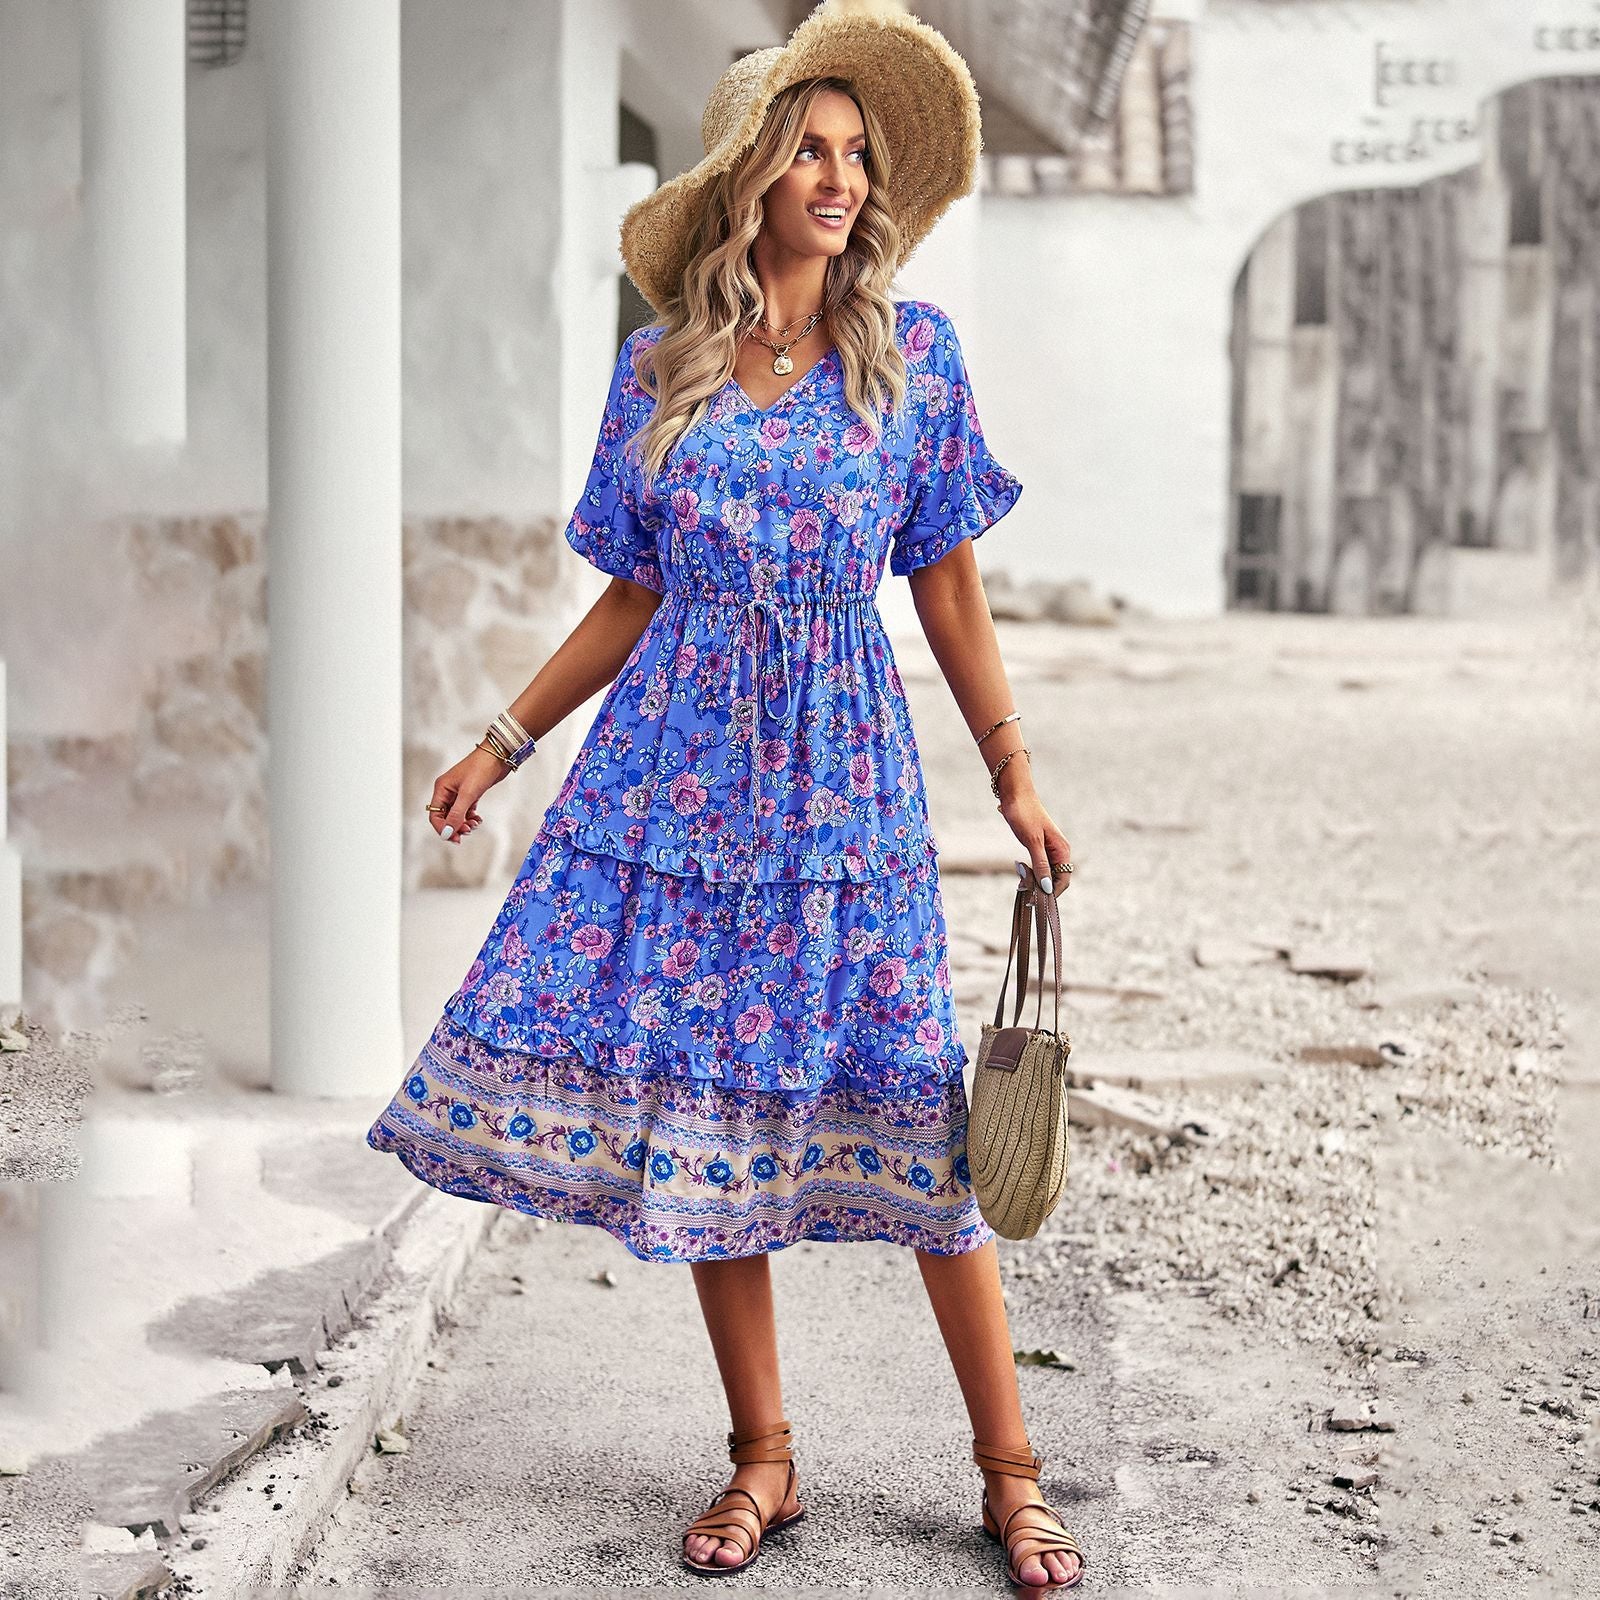 Women's Bohemian Printed A-line Summer Dress - Vibrant and Stylish - Ootddress